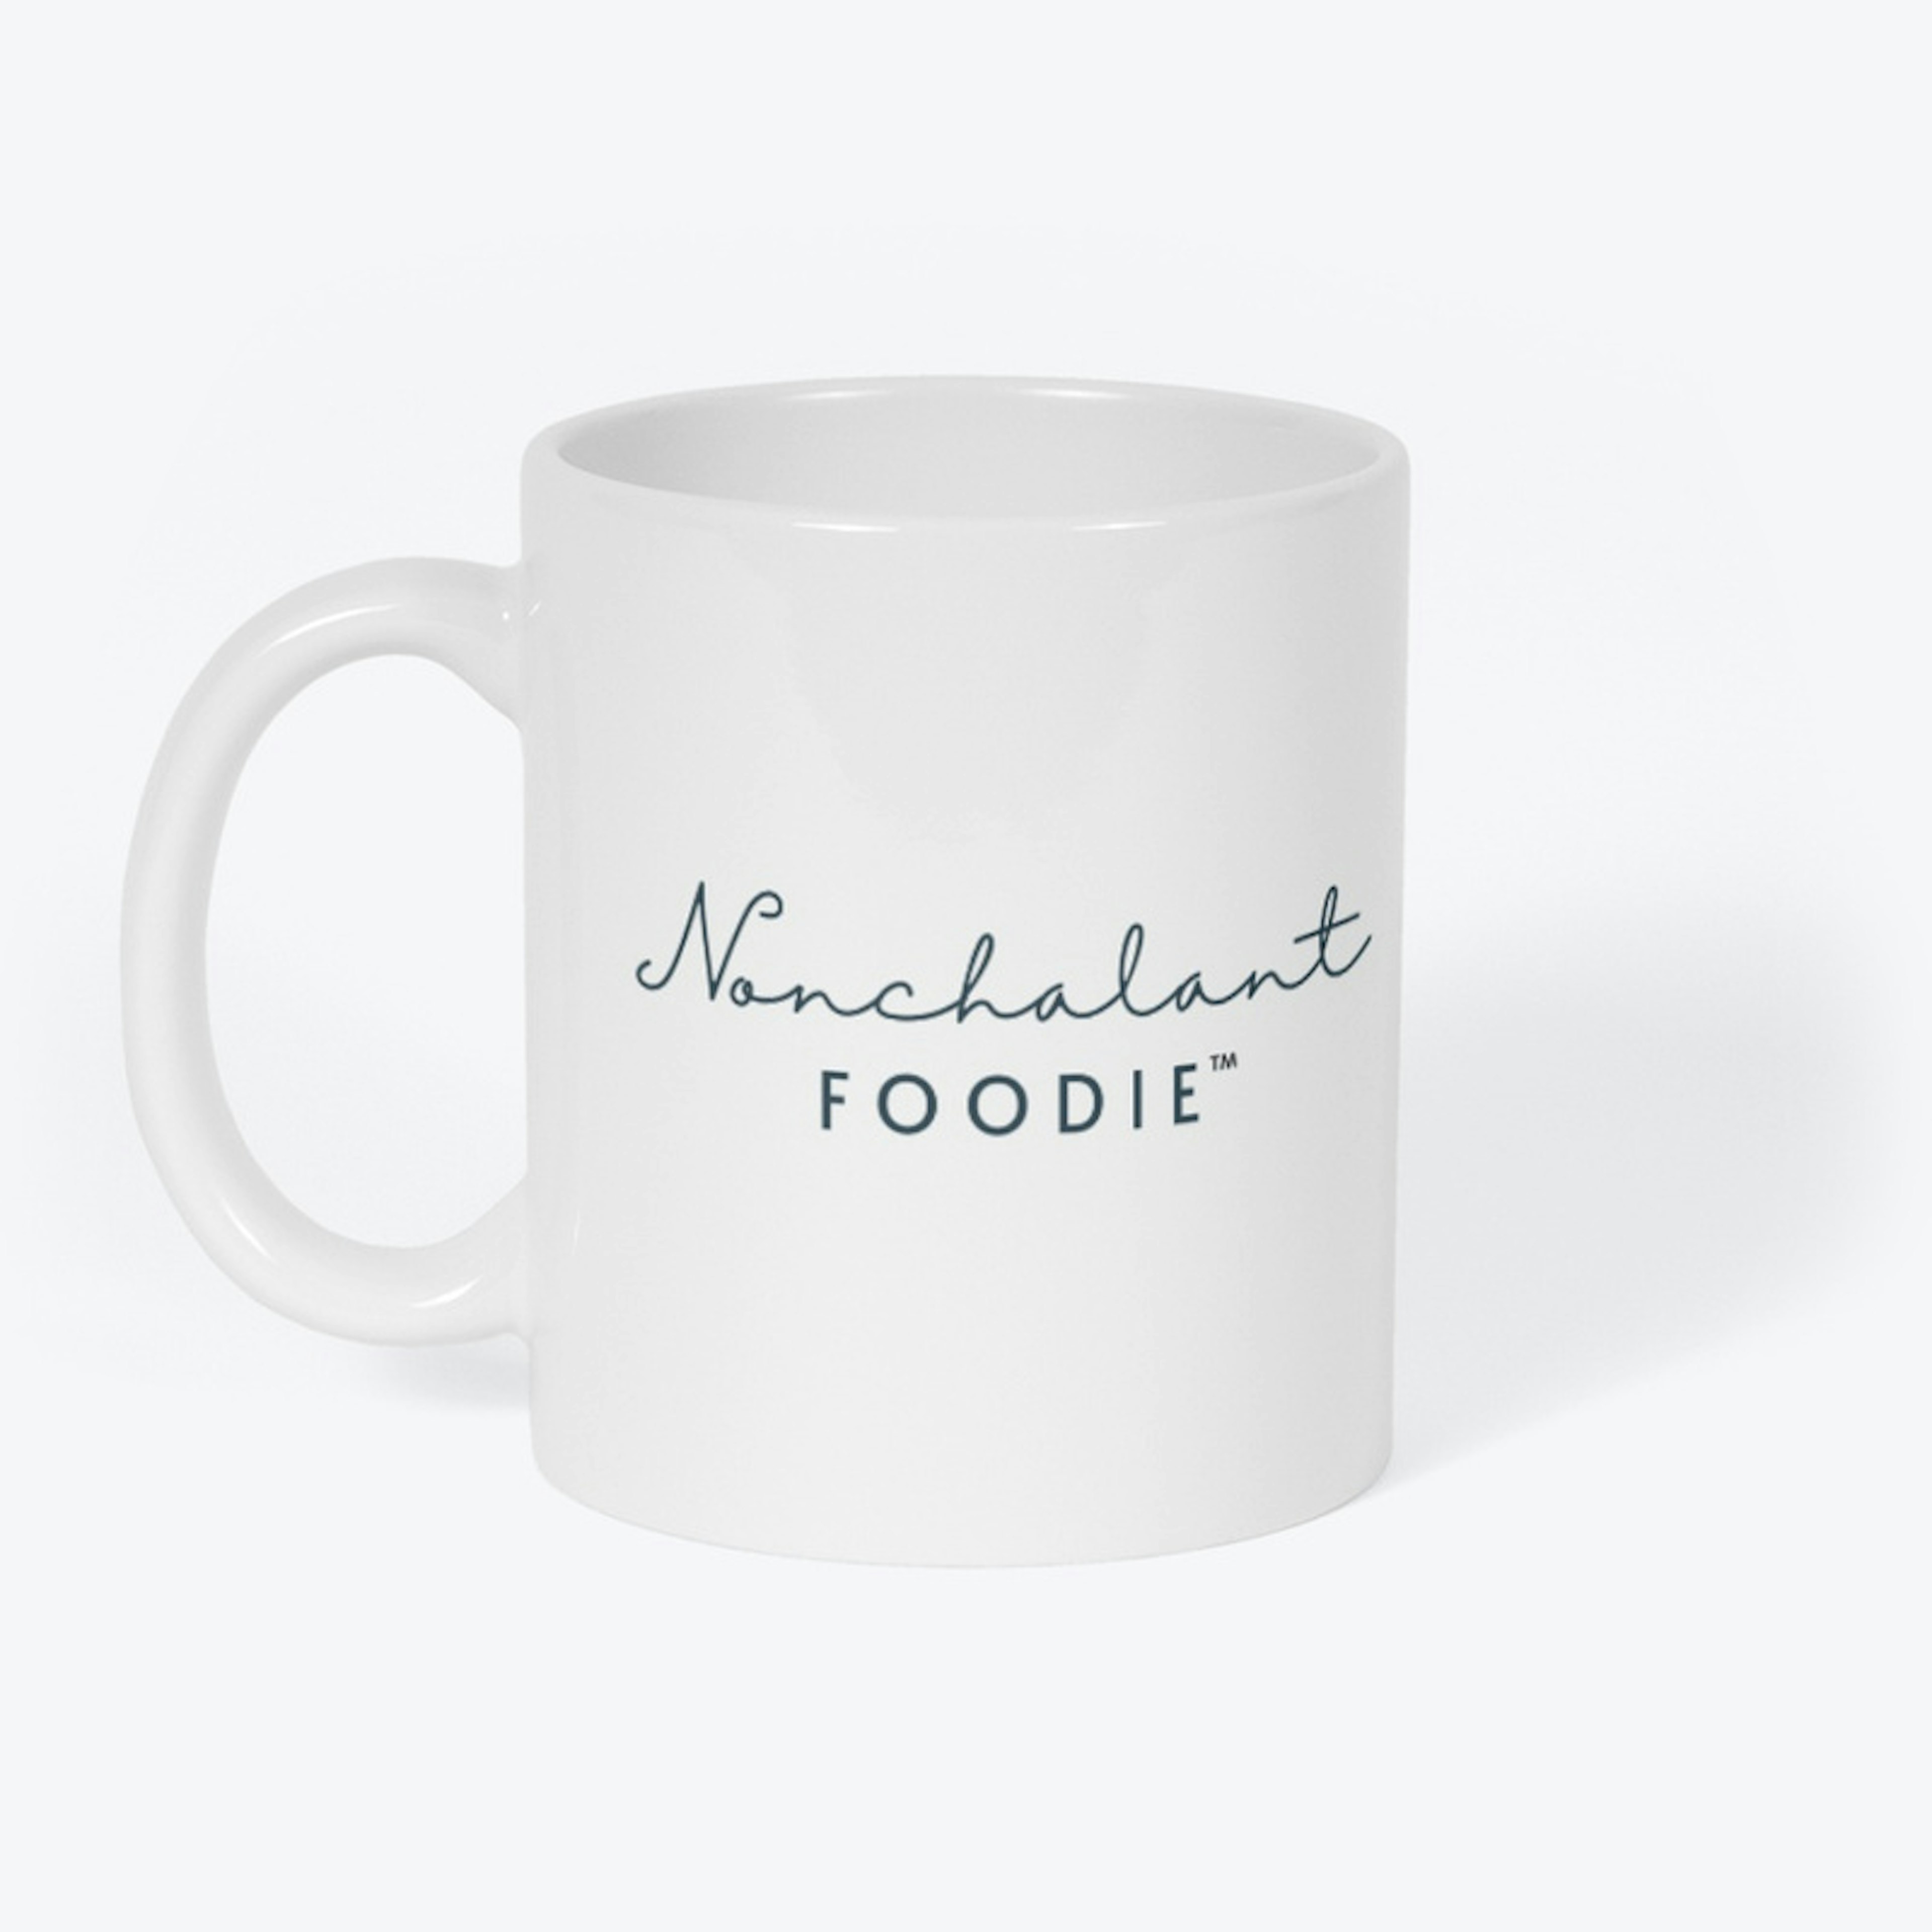 The Nonchalant Foodie Mug